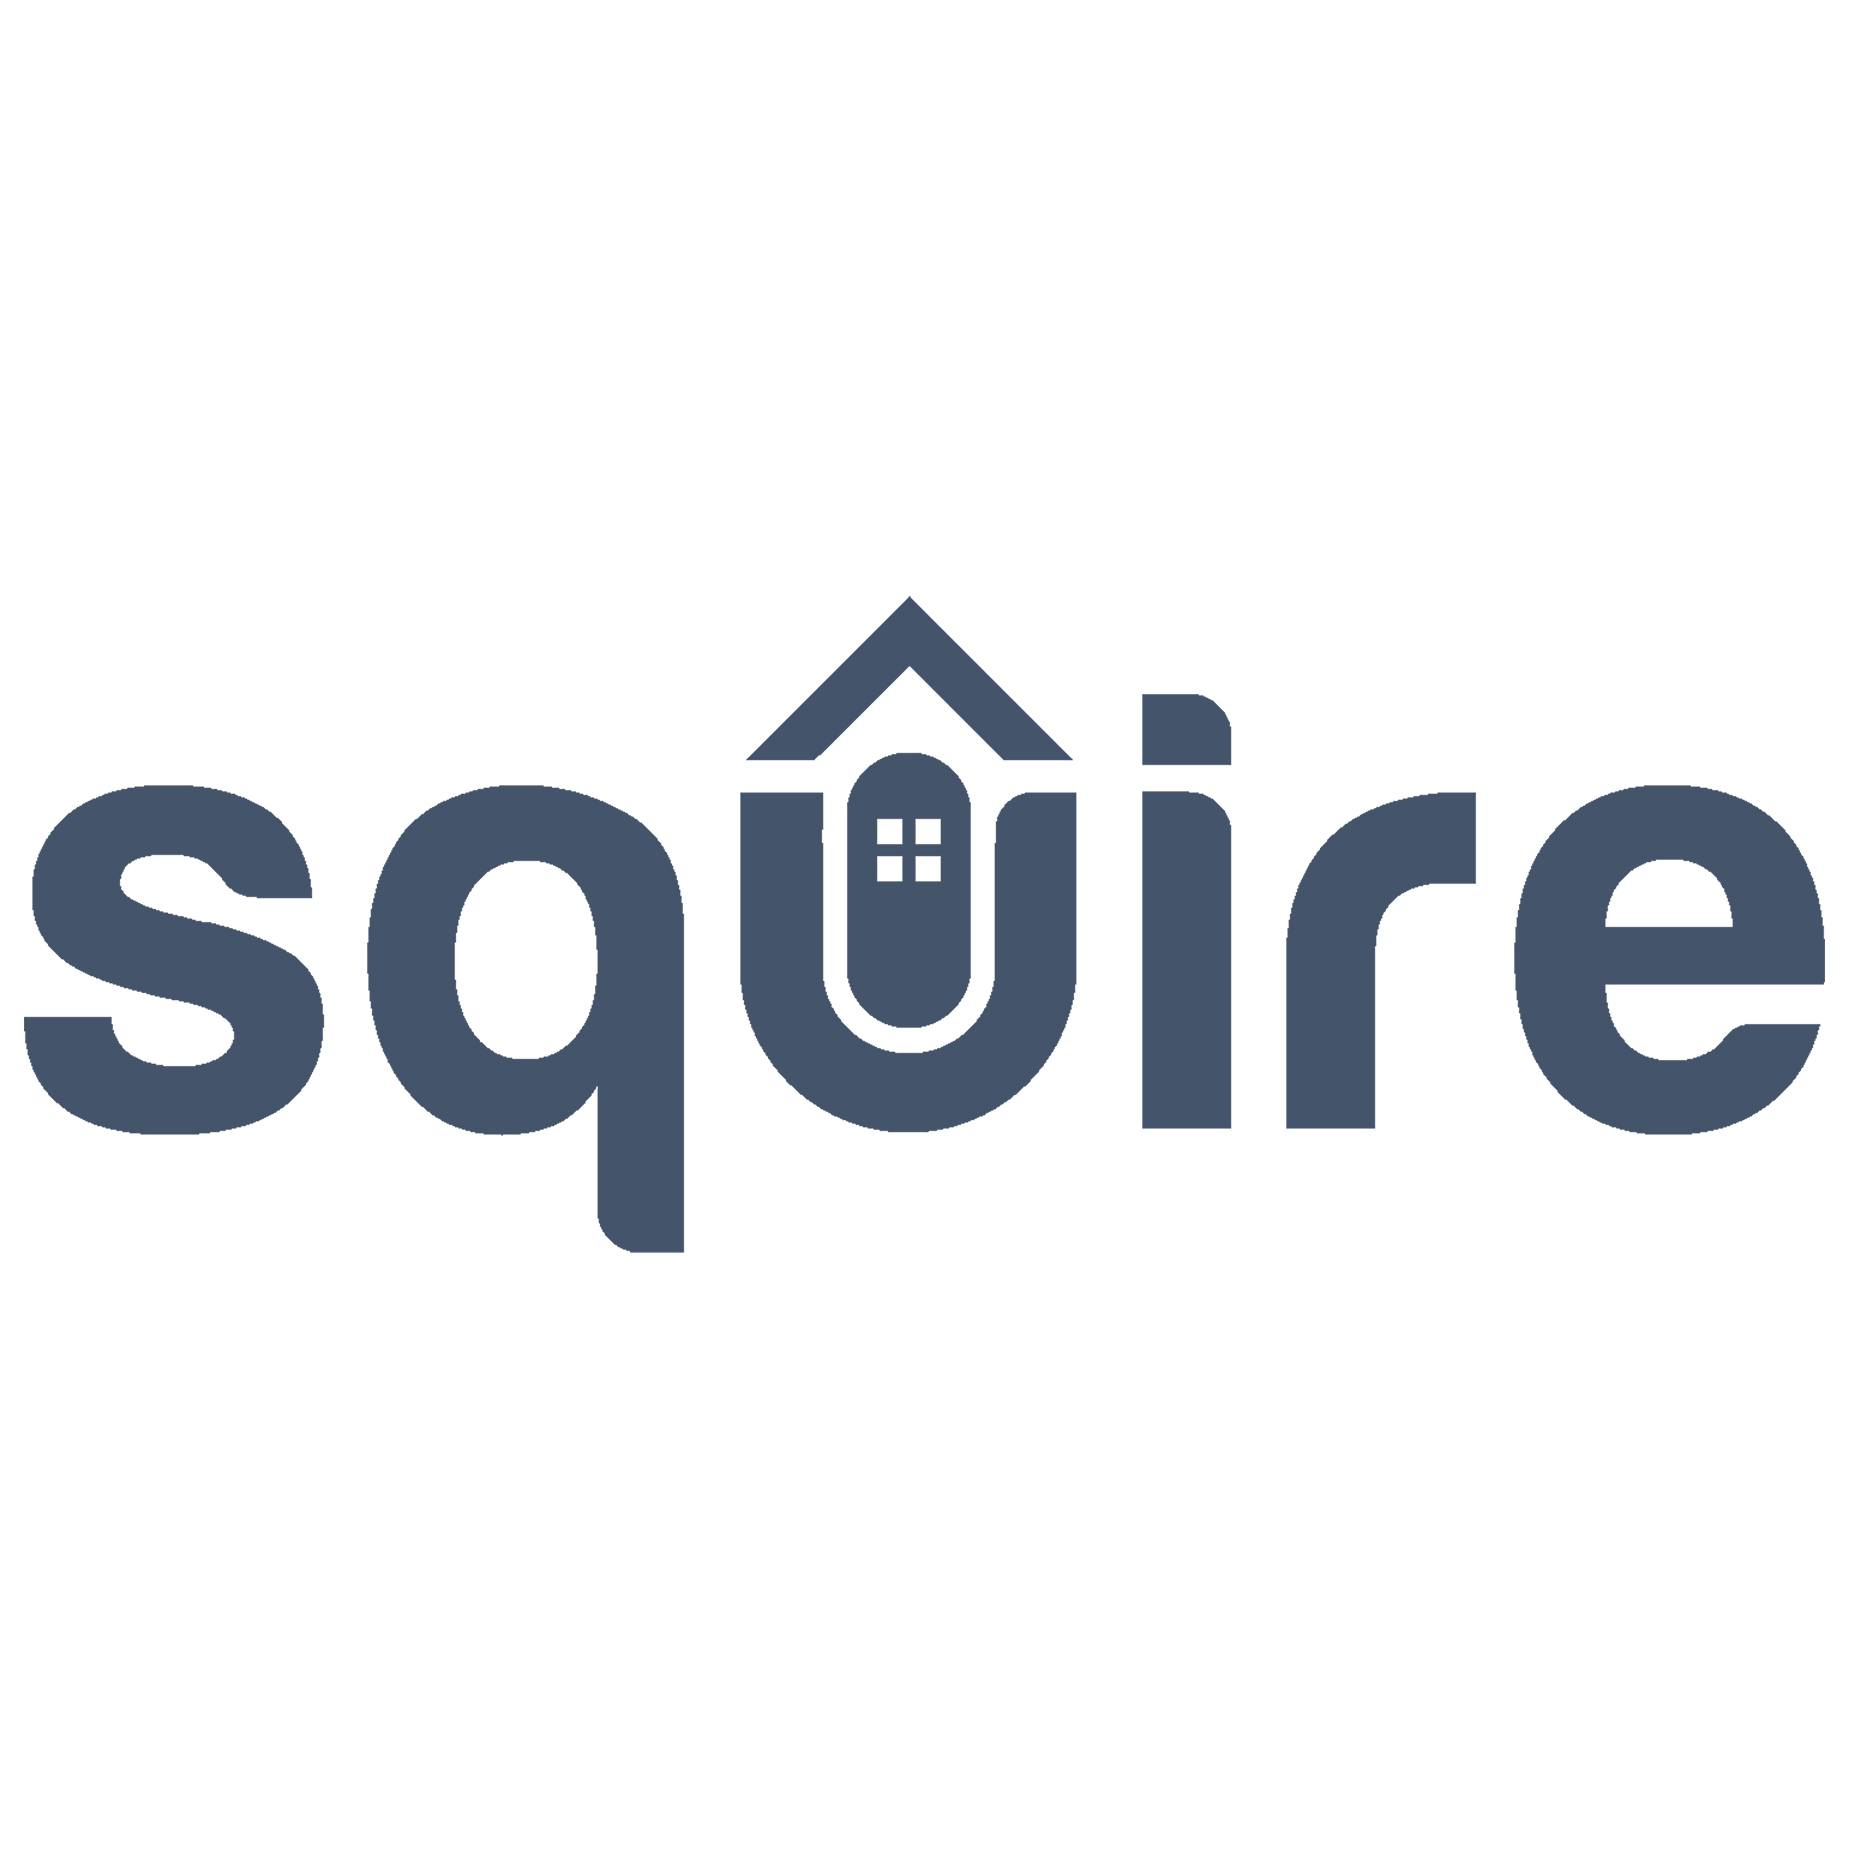 Squire logo